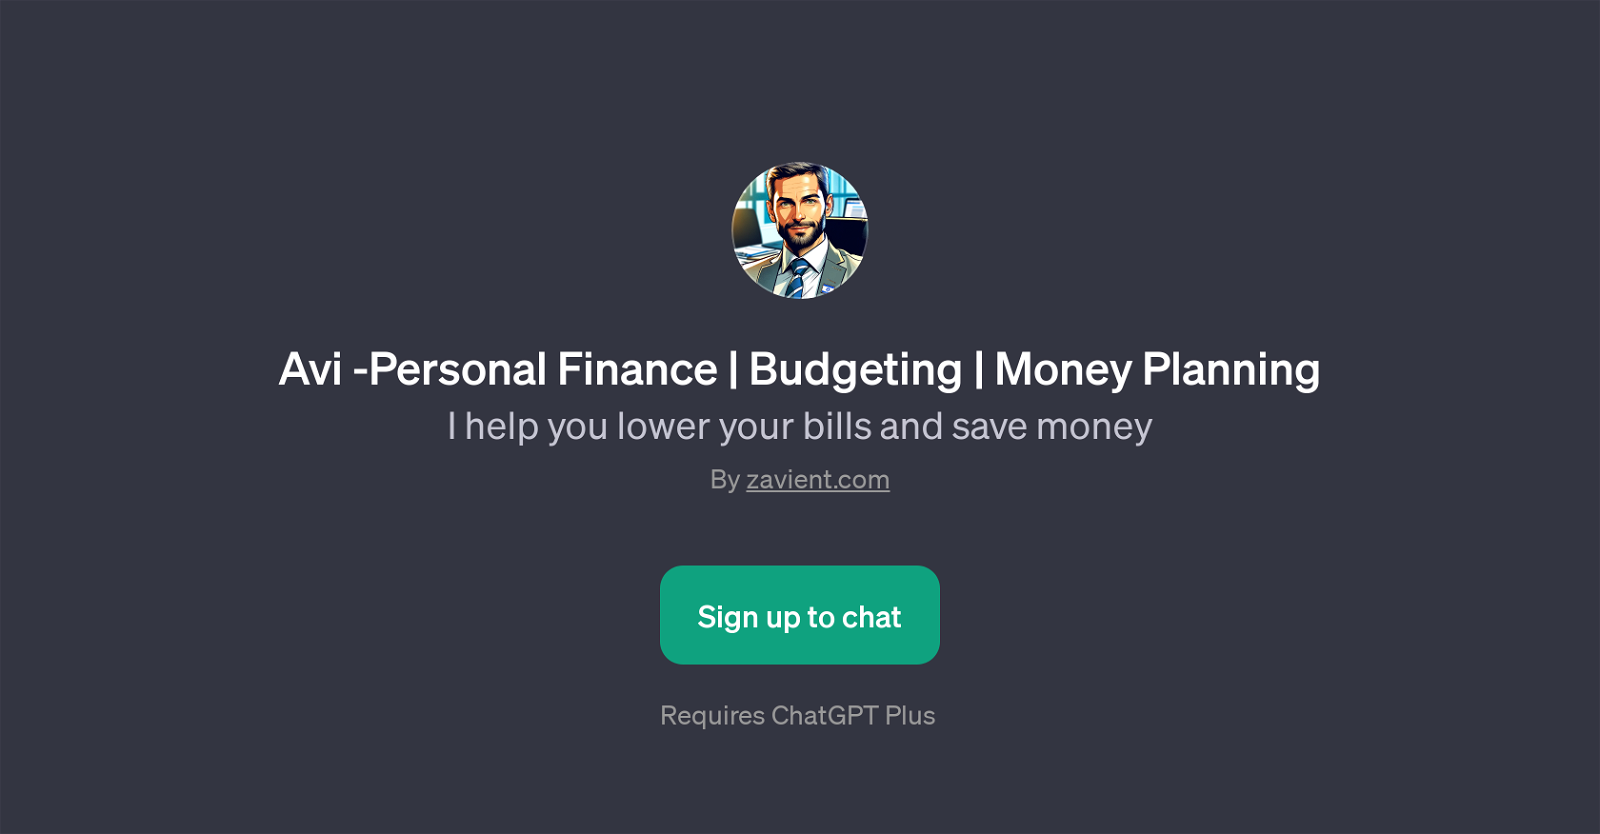 Avi - Personal Finance | Budgeting | Money Planning website